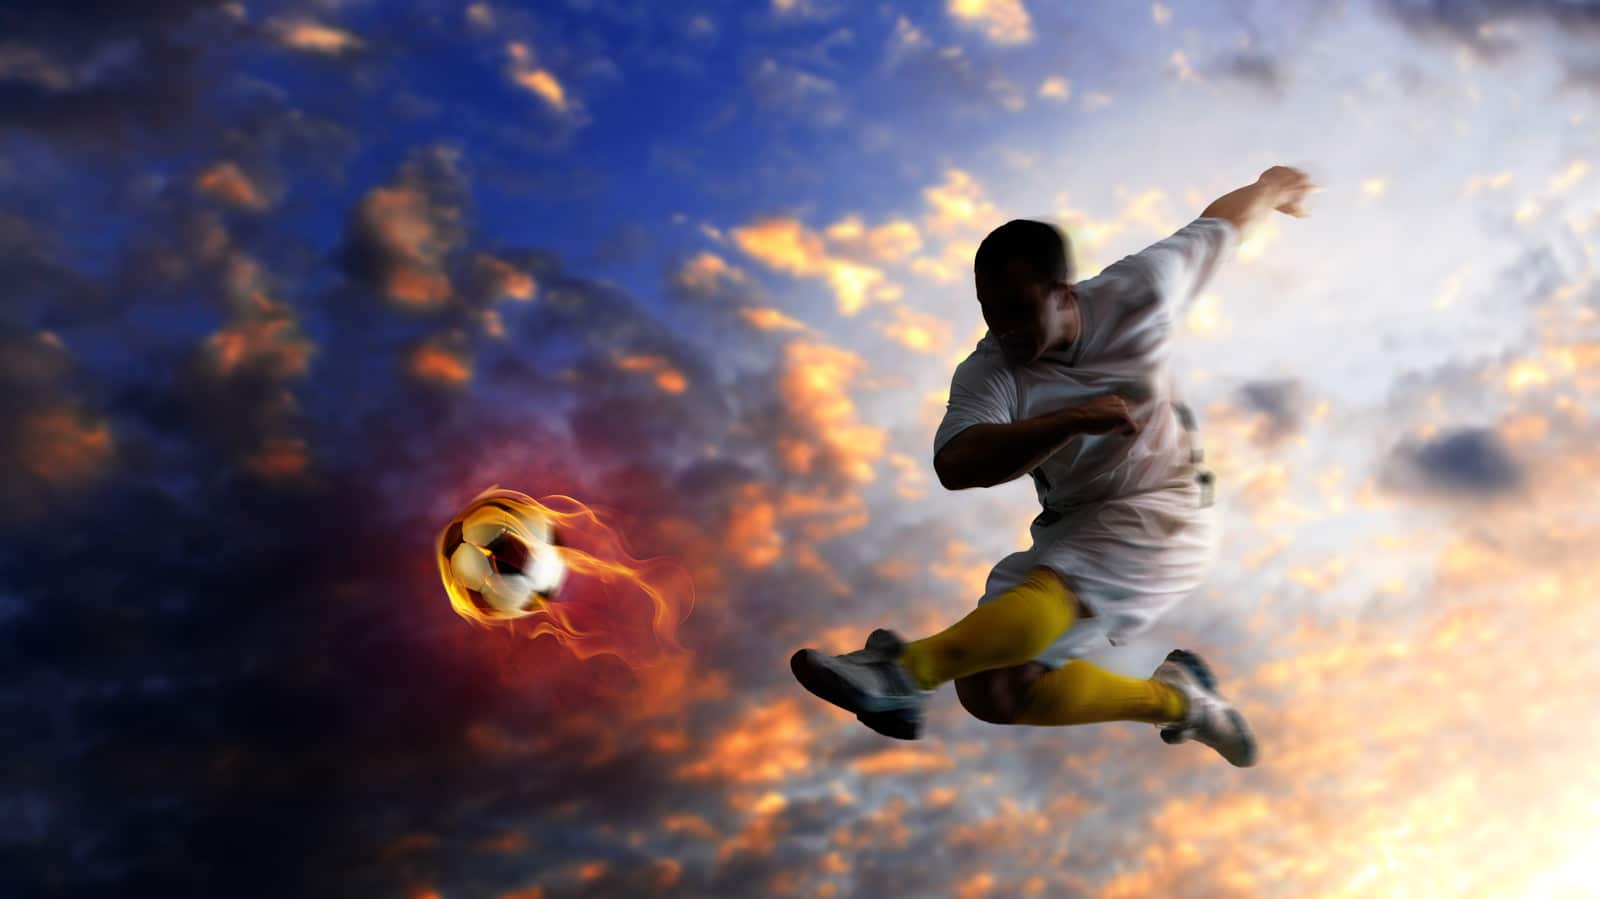 Young soccer player kicking a flaming football